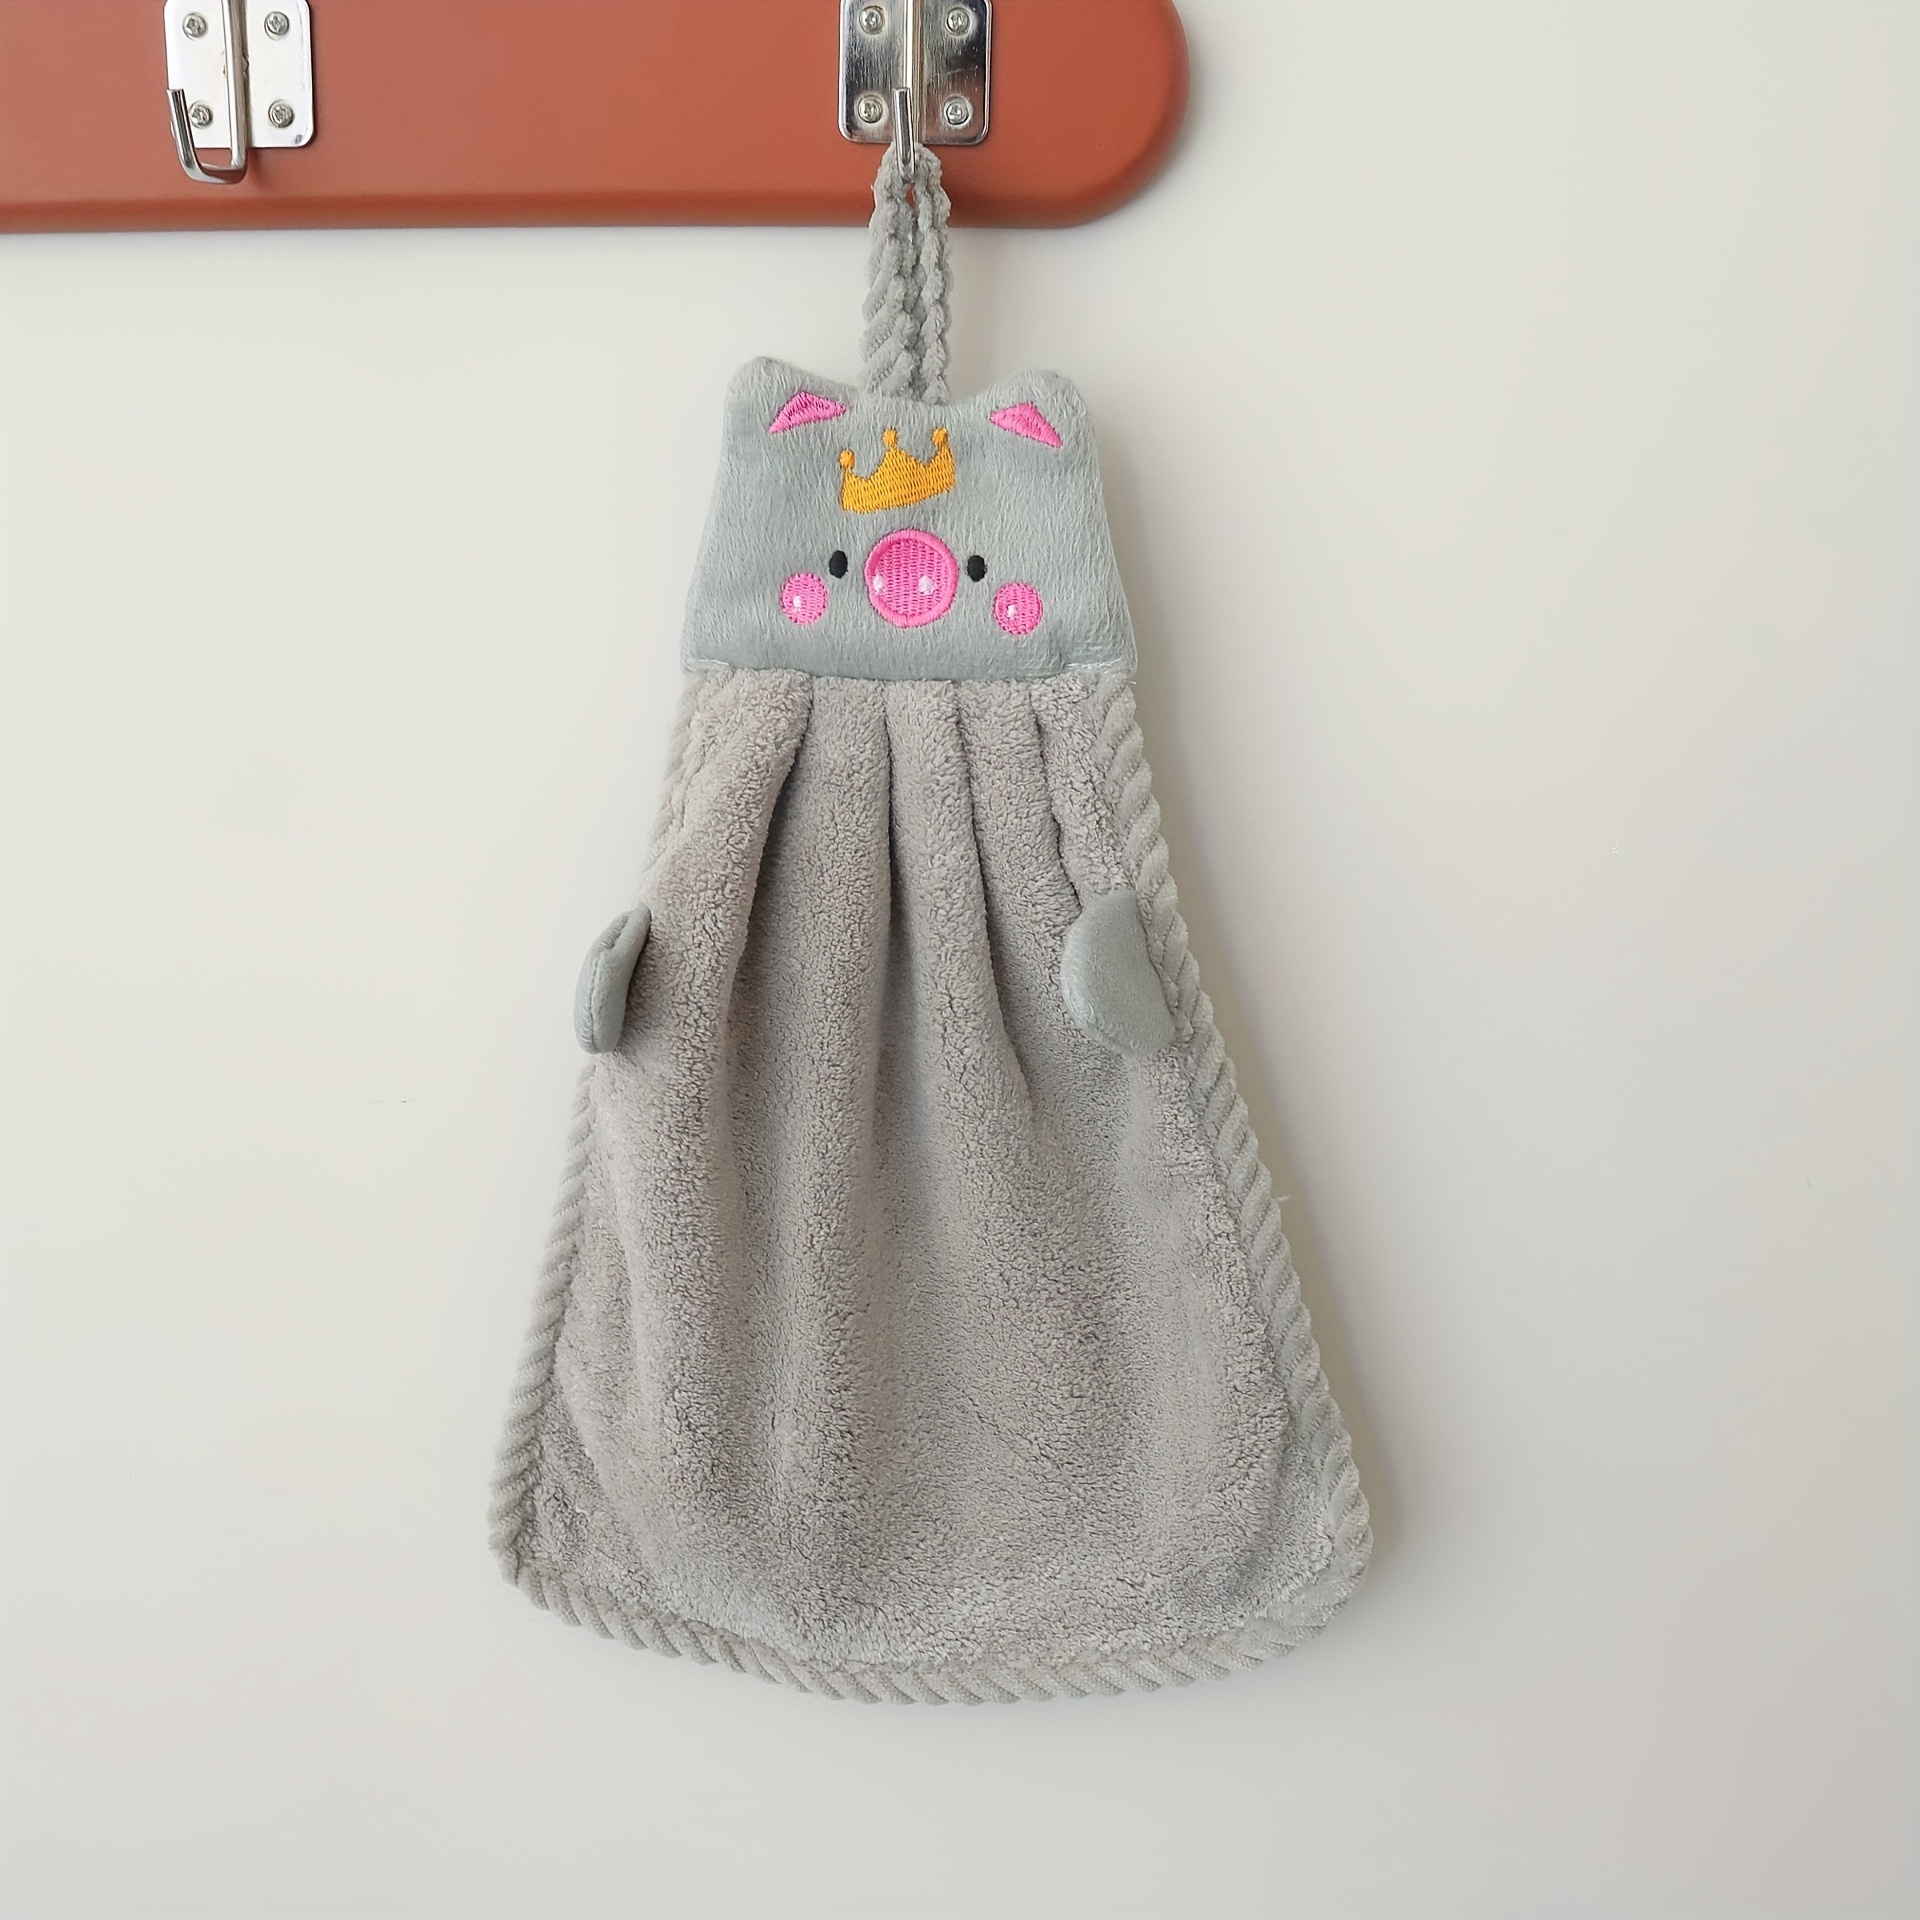 1pc Cute Pig Shaped Hanging Hand Towel, Grey